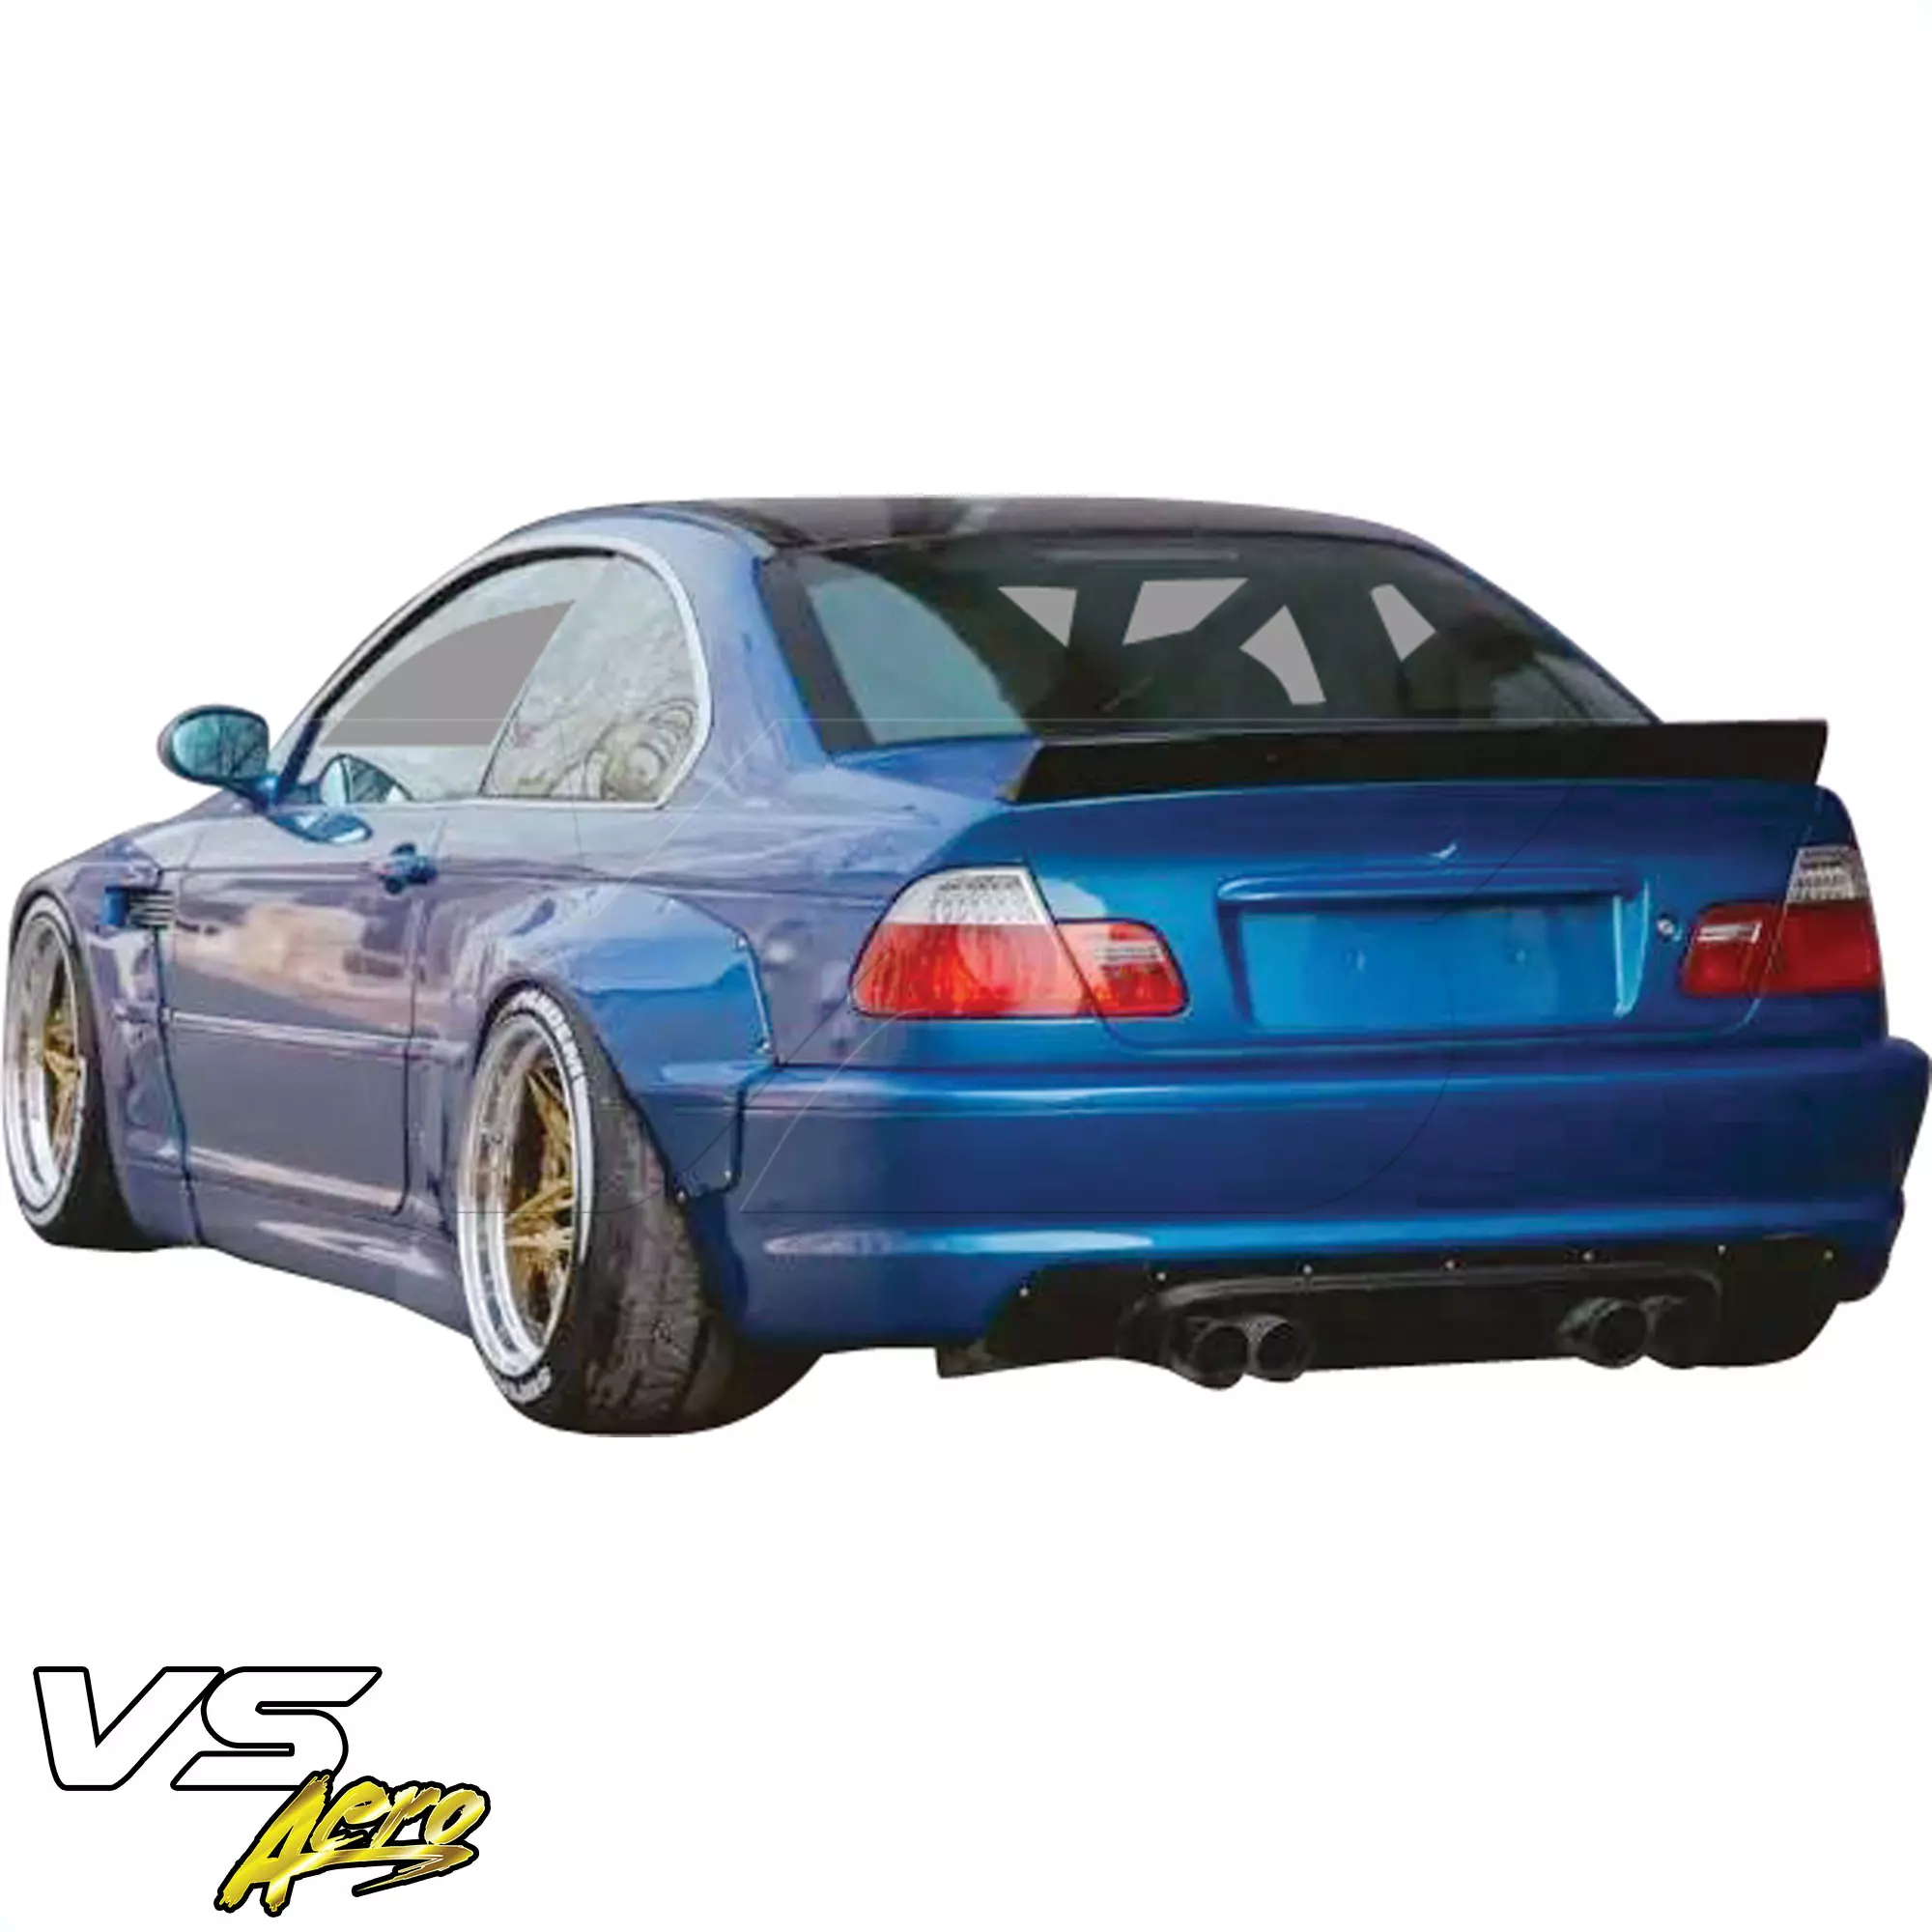 VSaero FRP TKYO Spoiler Wing > BMW 3-Series 325Ci 330Ci E46 1999-2005 > 2dr Coupe - Image 5